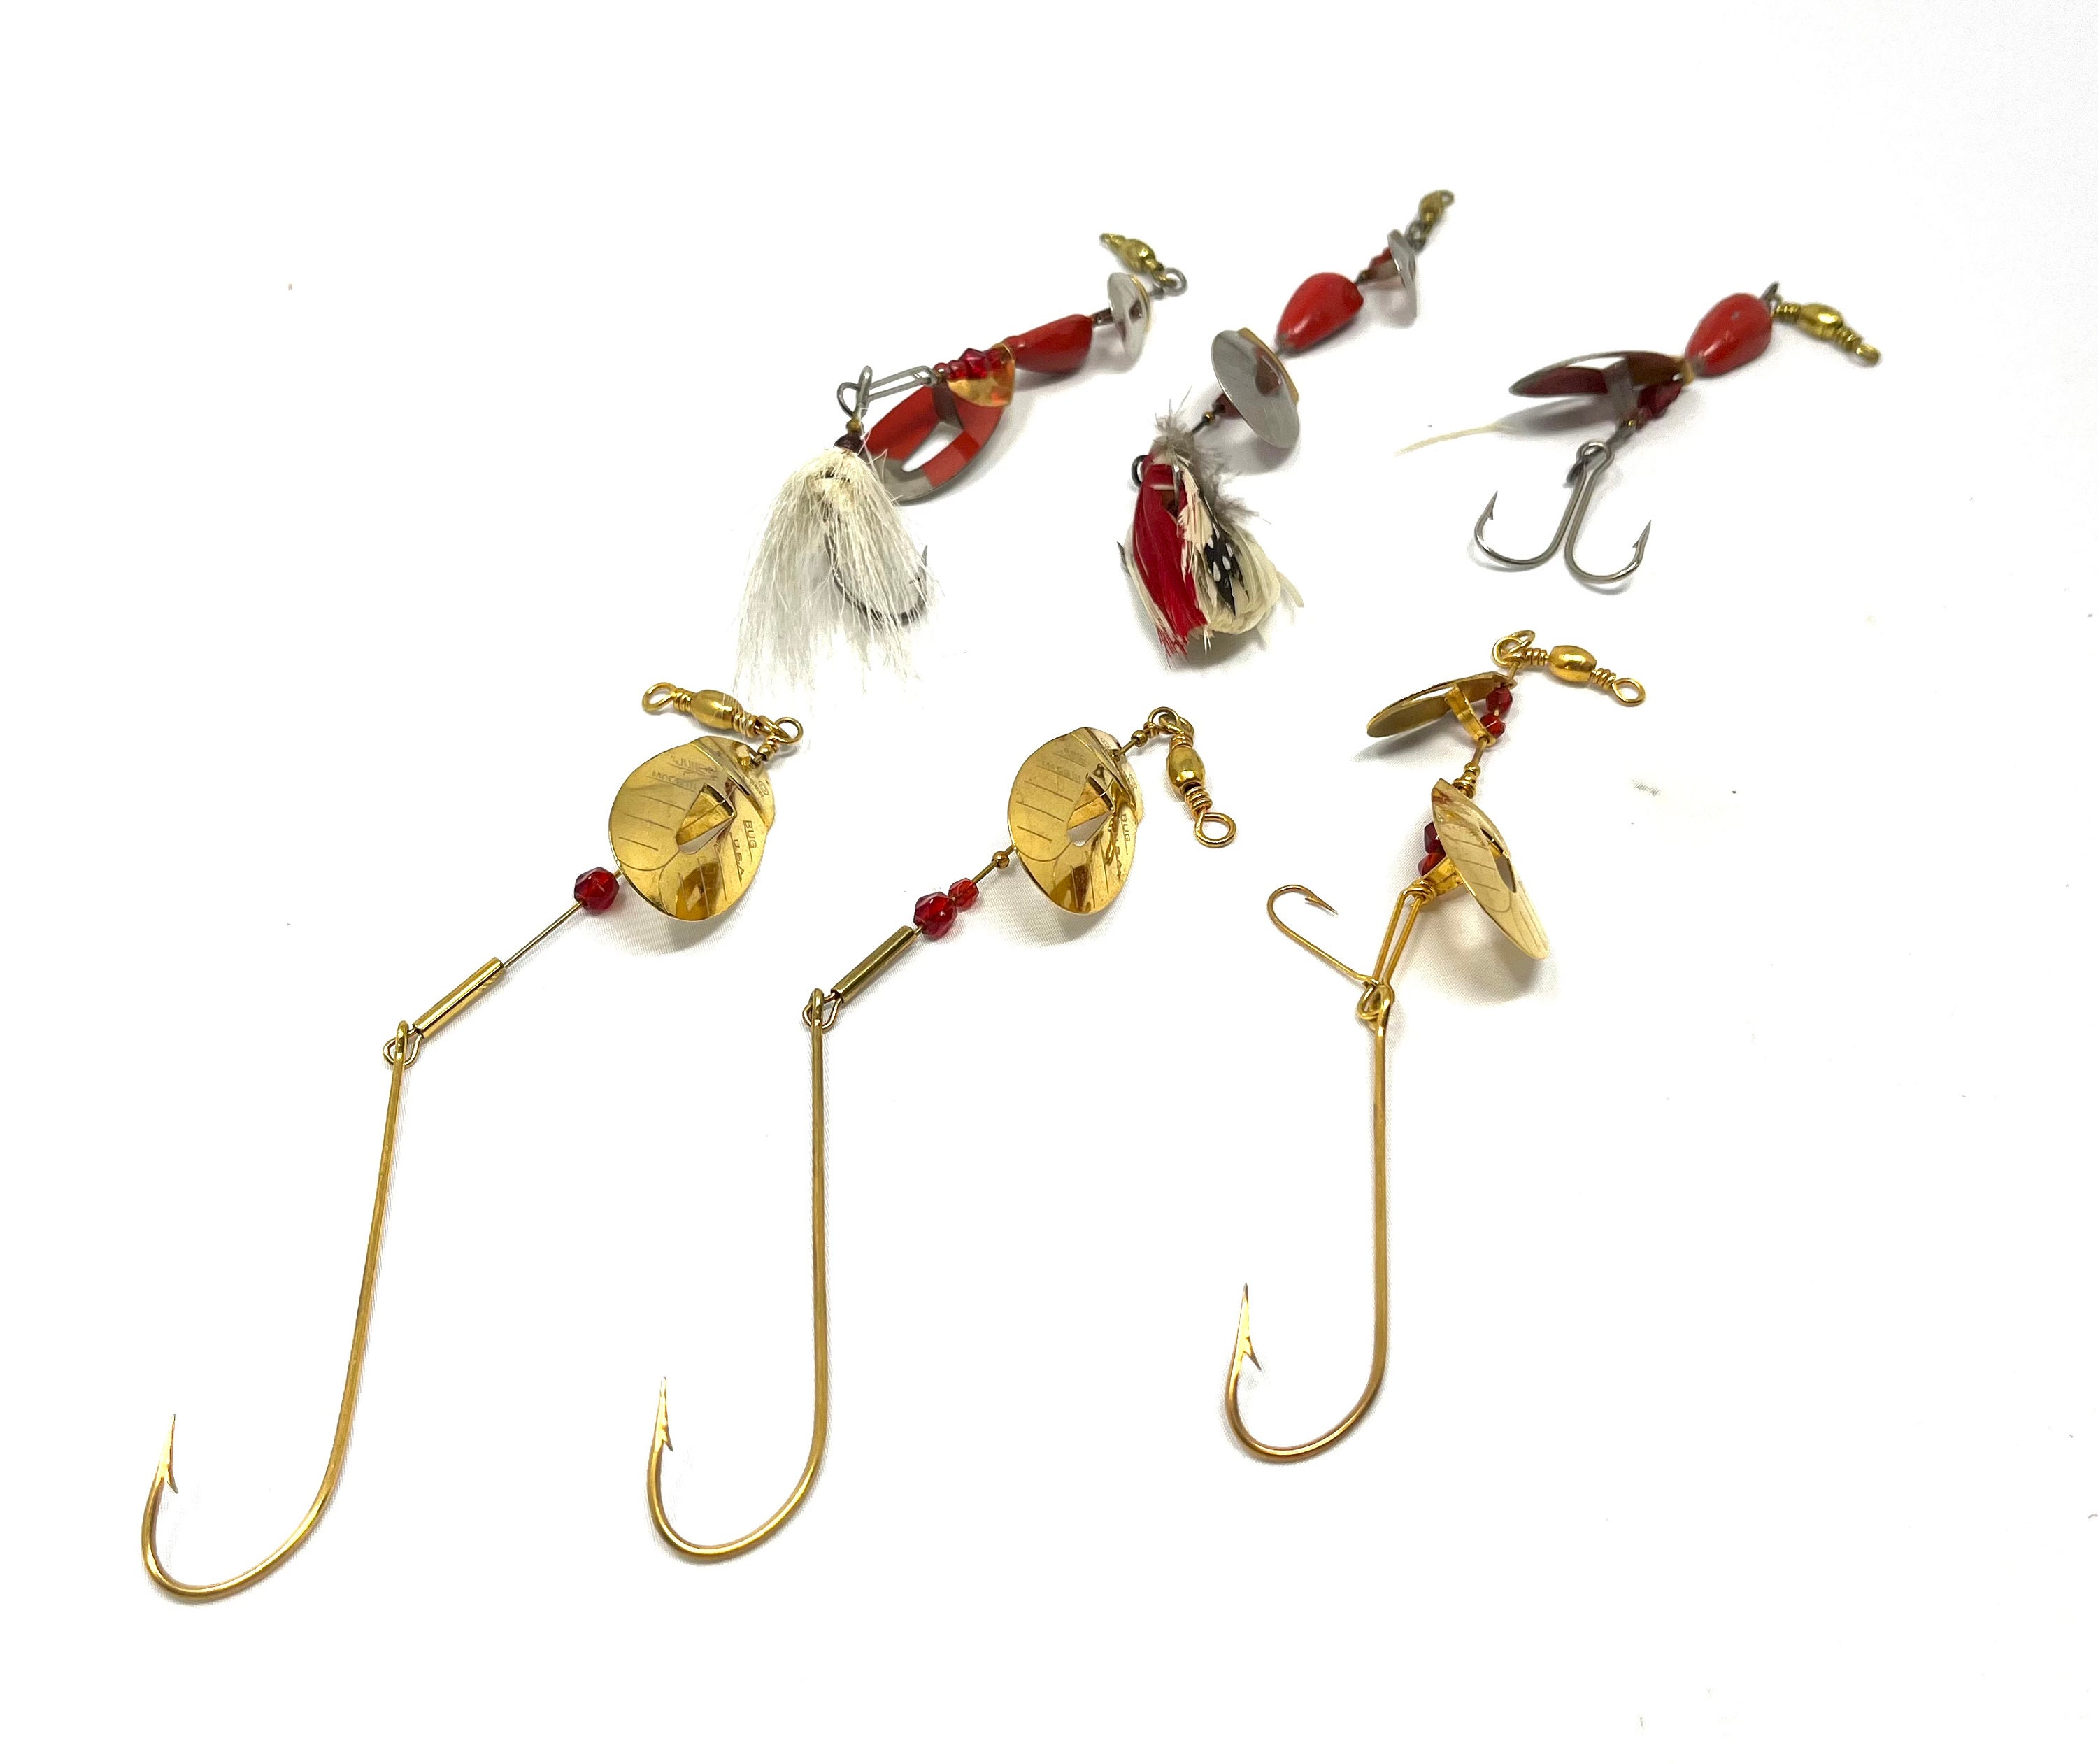 6 Vintage Pflueger June Bug Spinner Fishing Lure / Antique Fishing